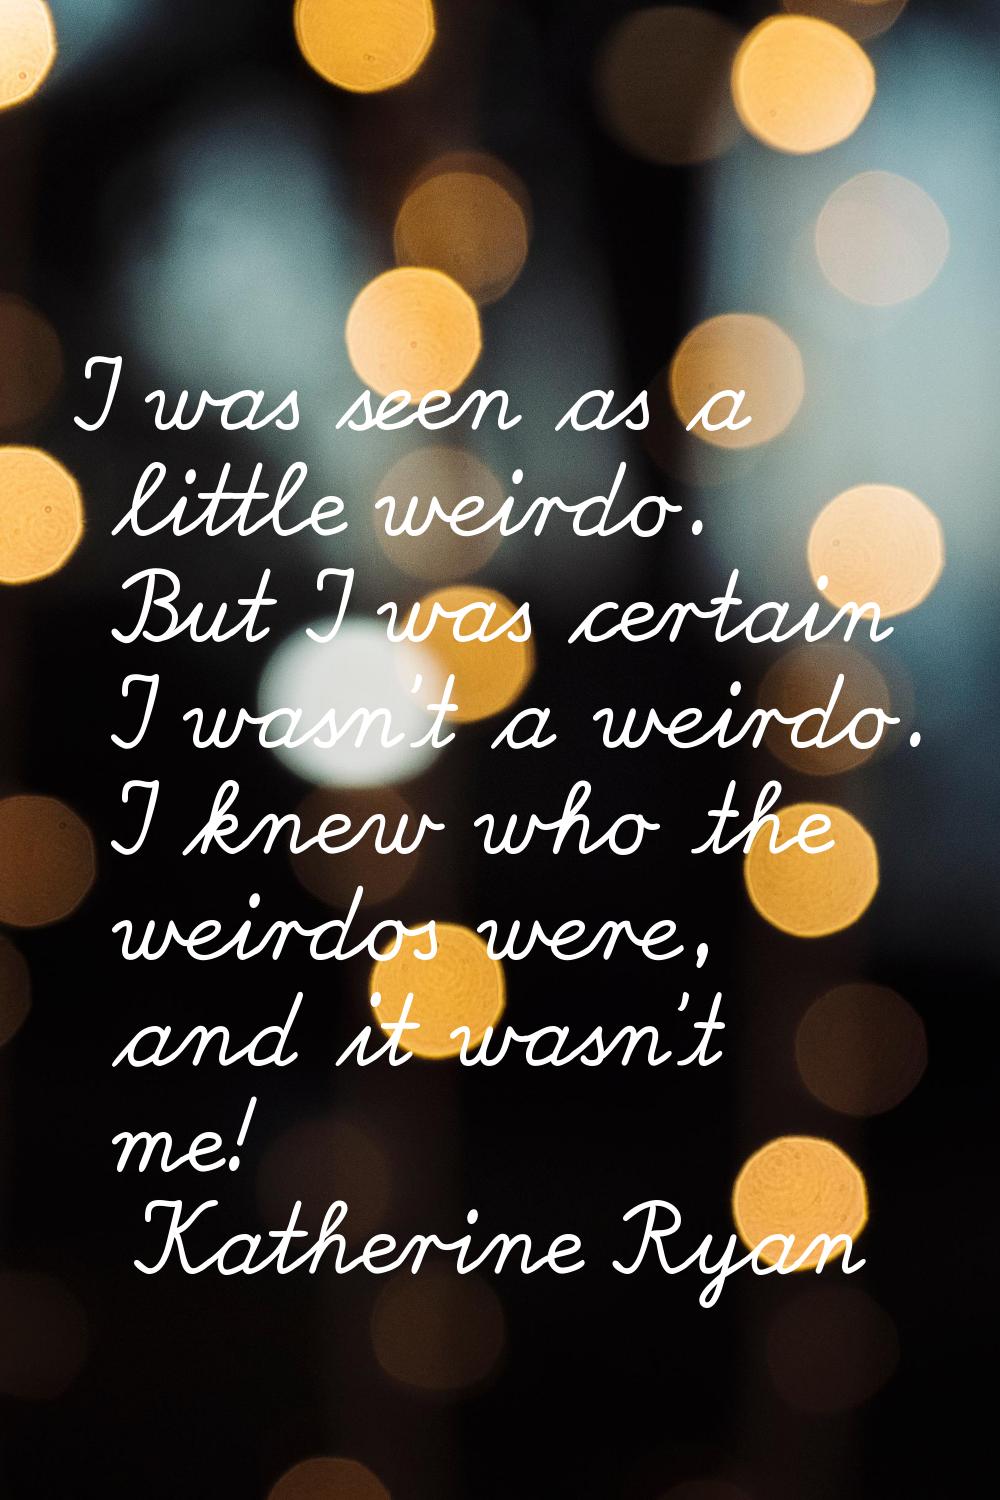 I was seen as a little weirdo. But I was certain I wasn't a weirdo. I knew who the weirdos were, an